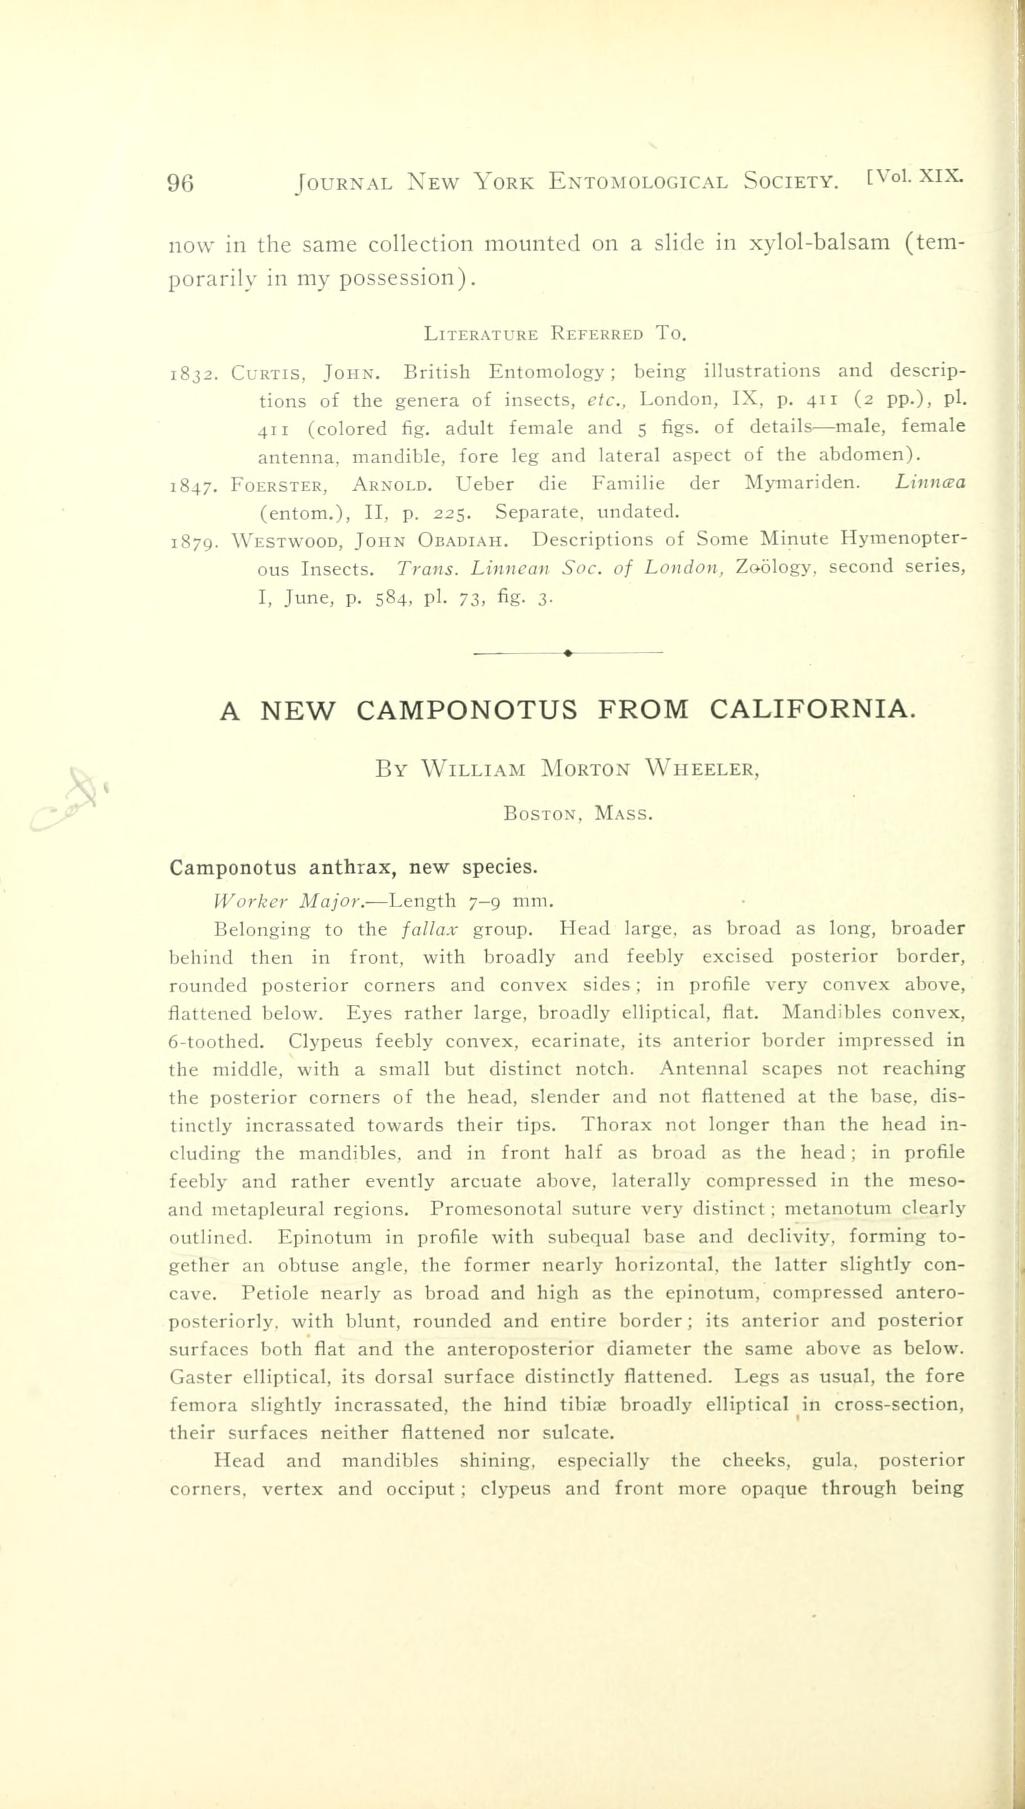 Media type: text; Wheeler 1911 Description: A new <i>Camponotus </i>from California;